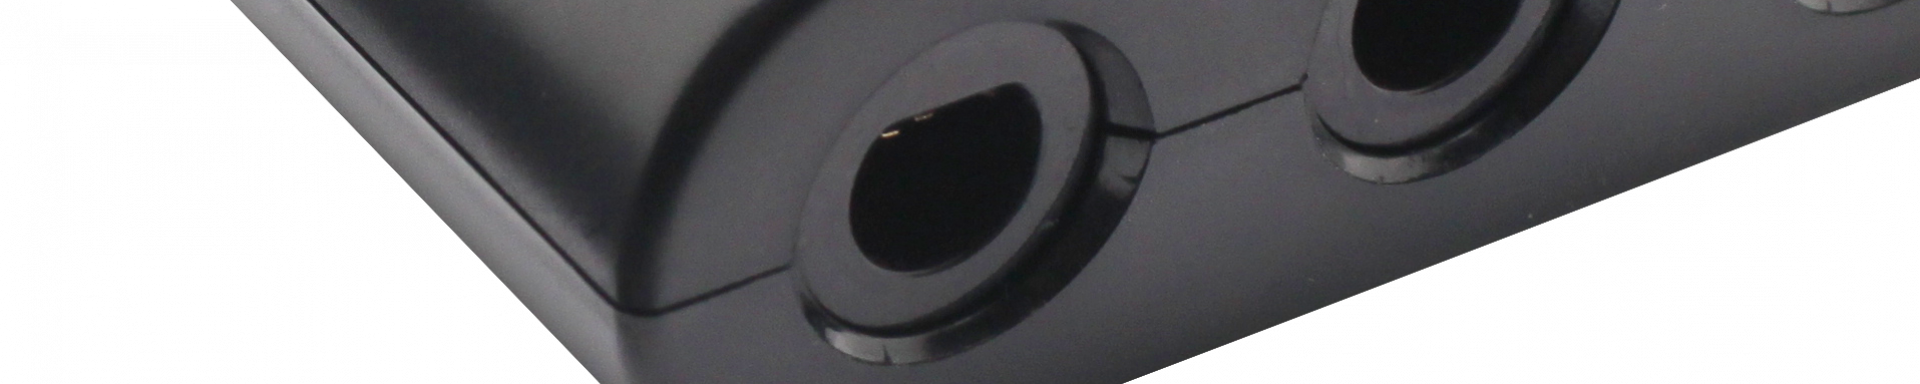 piranha gamecube controller adapter